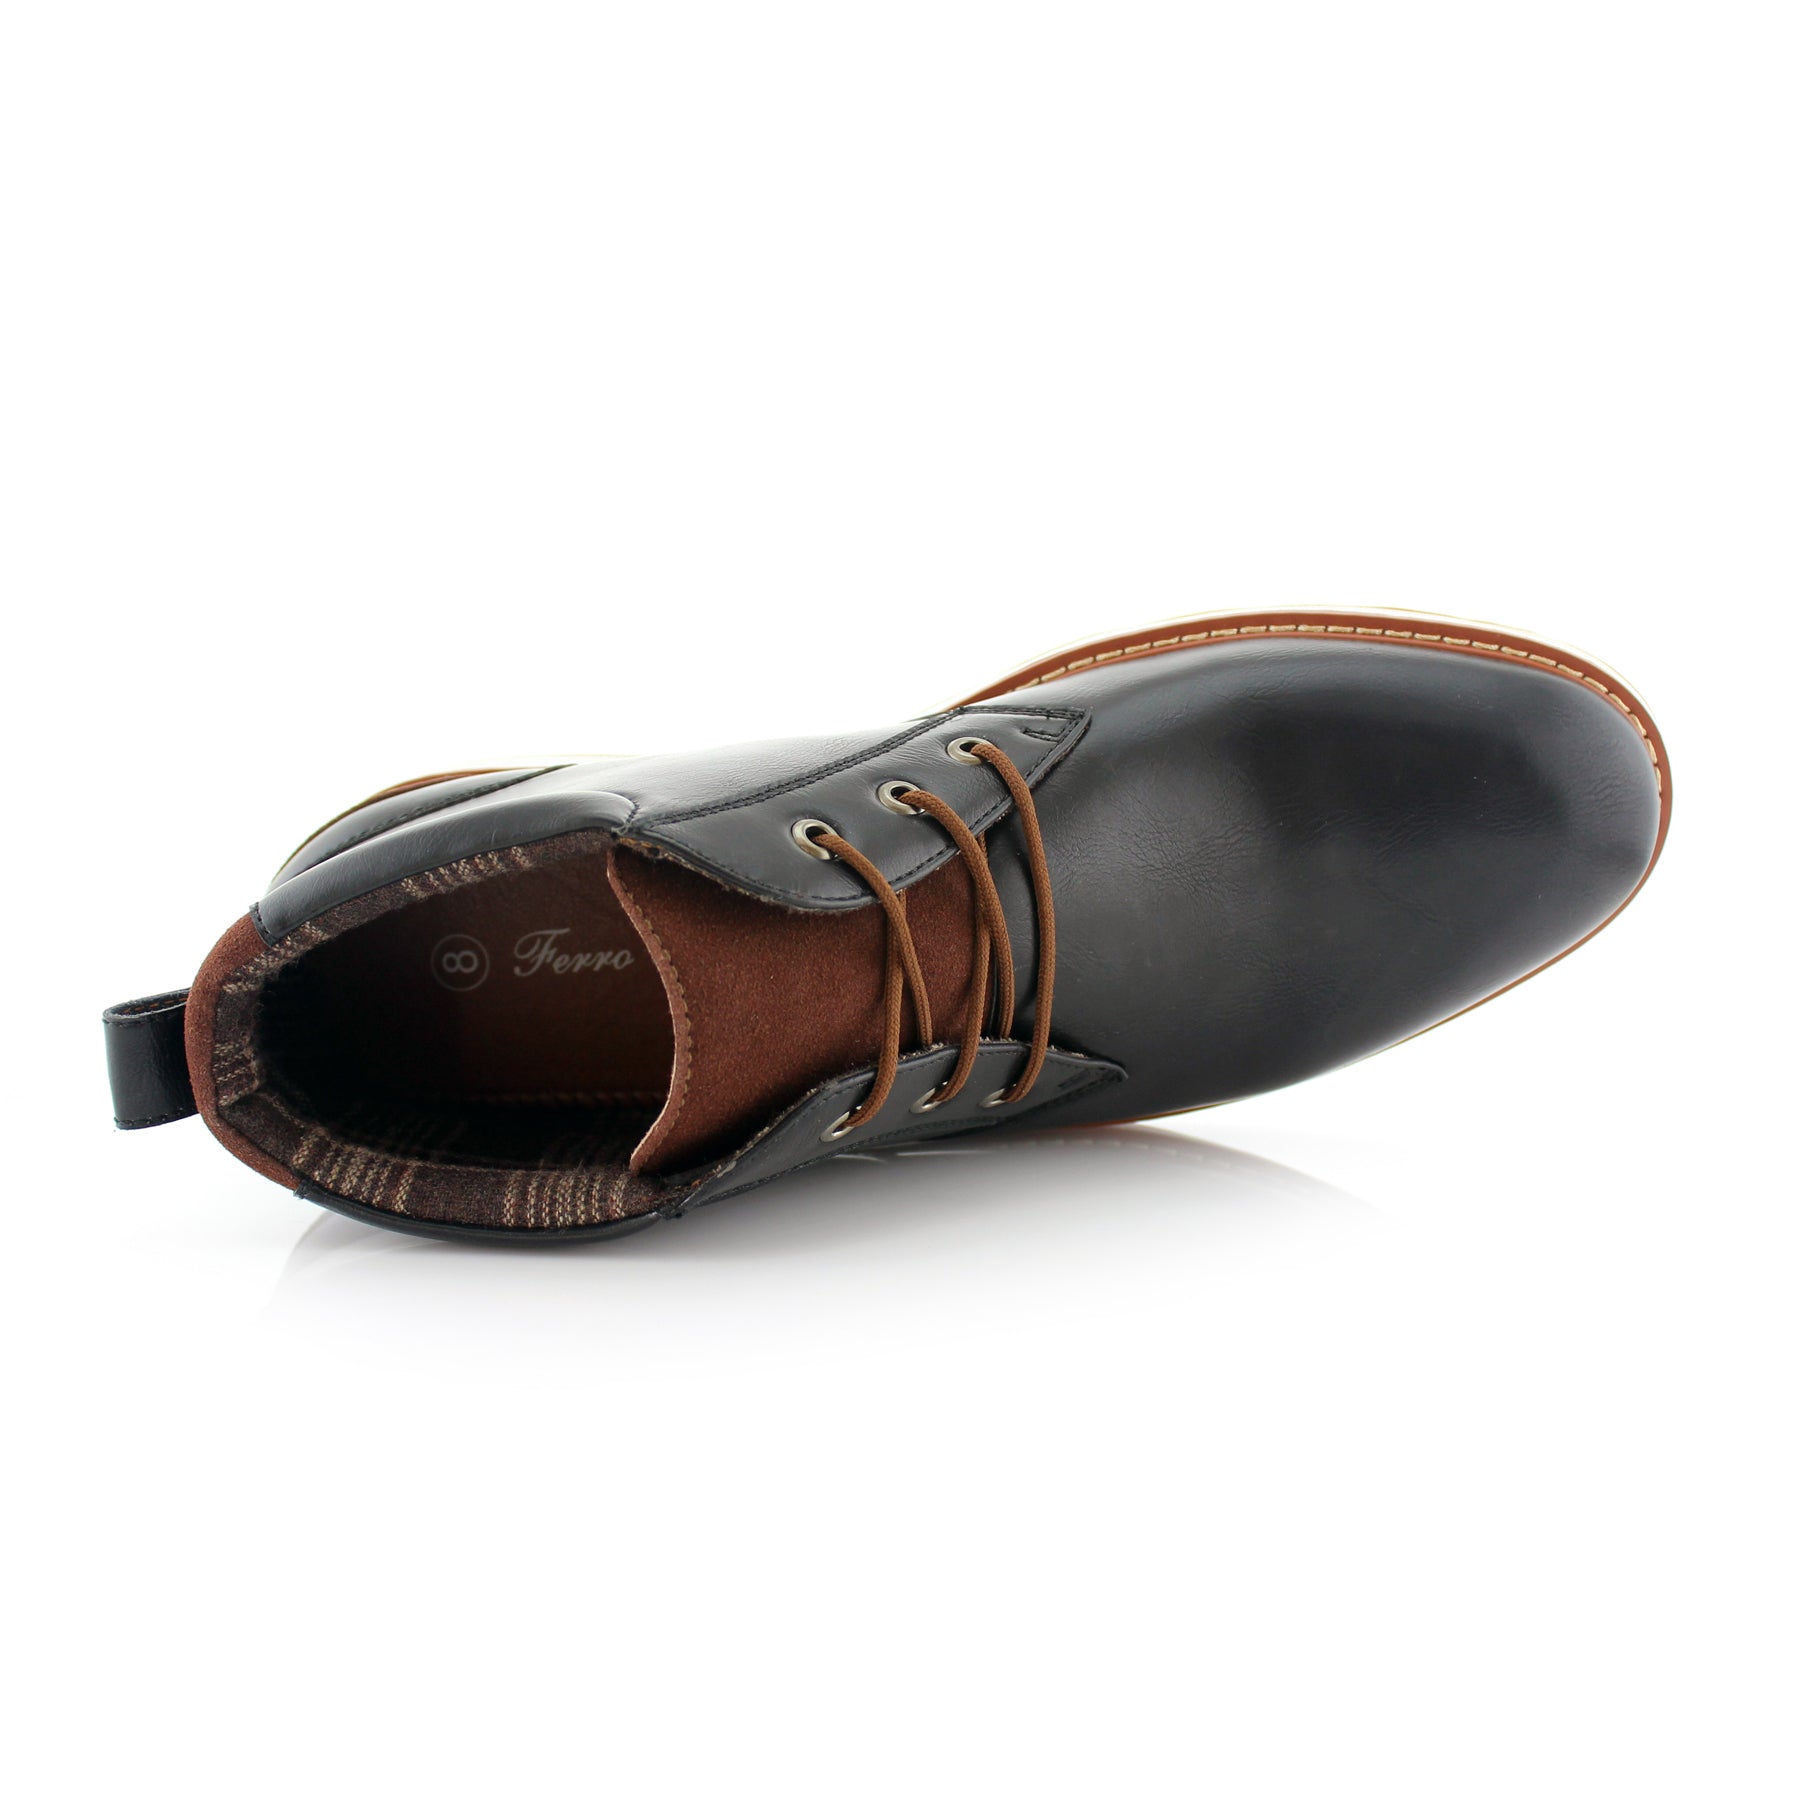 Sneaker Chukka Boots | Houstan by Ferro Aldo | Conal Footwear | Top-Down Angle View